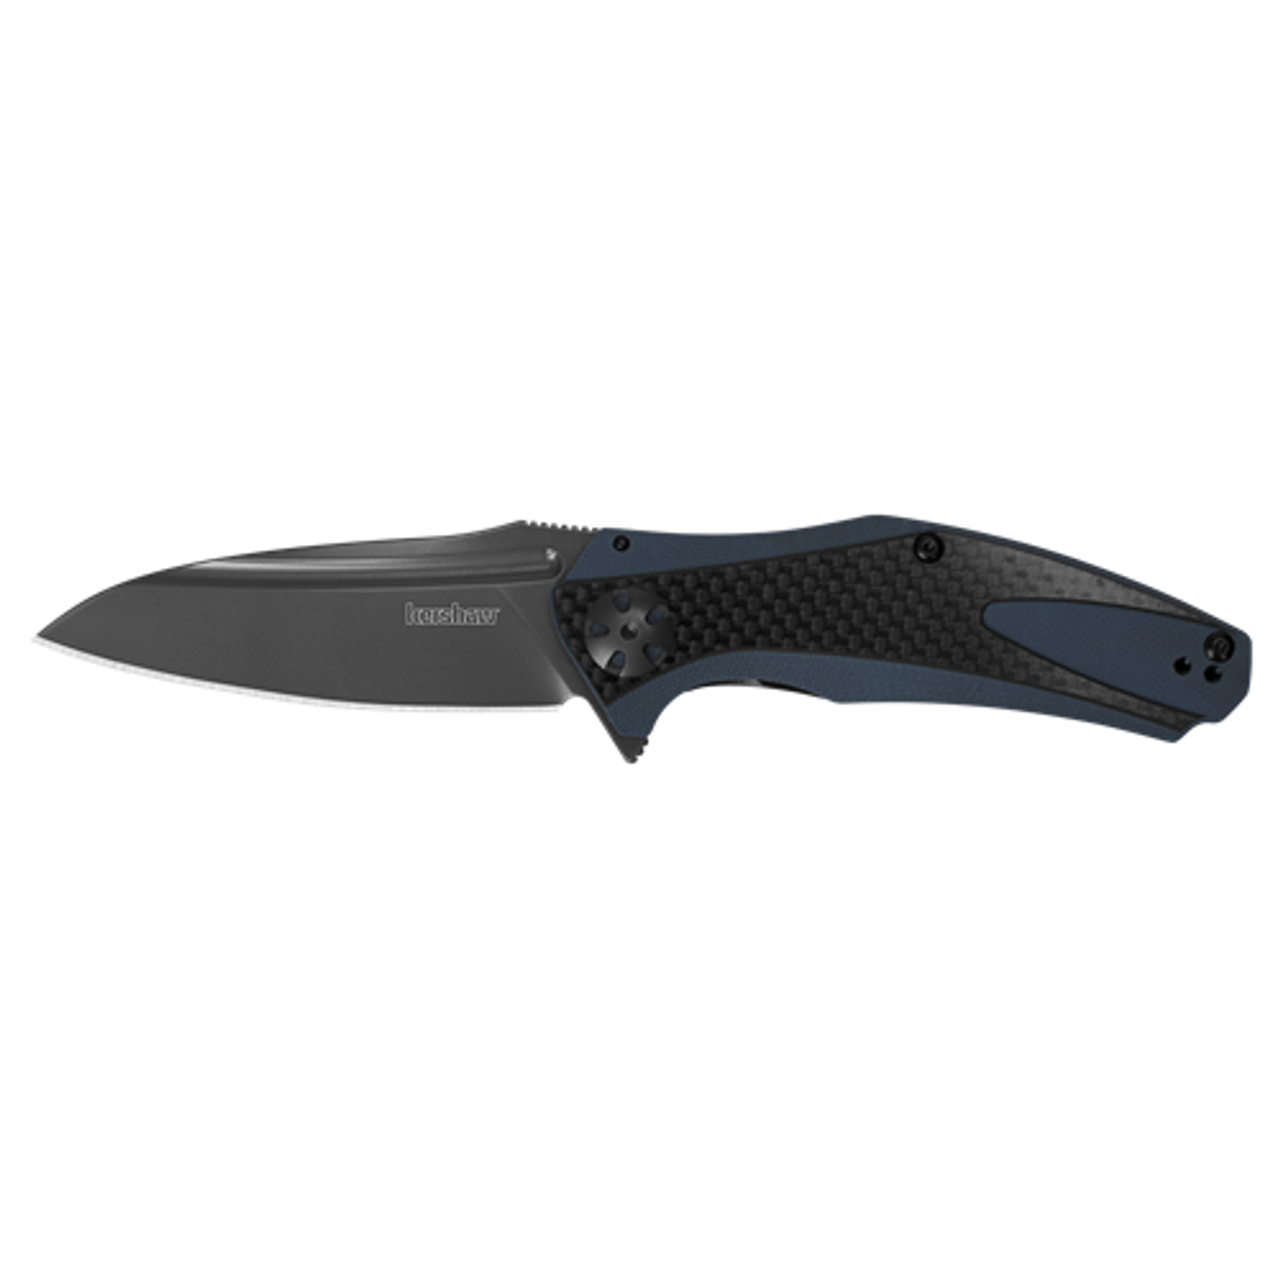 Natrix Carbon Fiber Folding Knife 3.25" 8Cr13MoV Steel